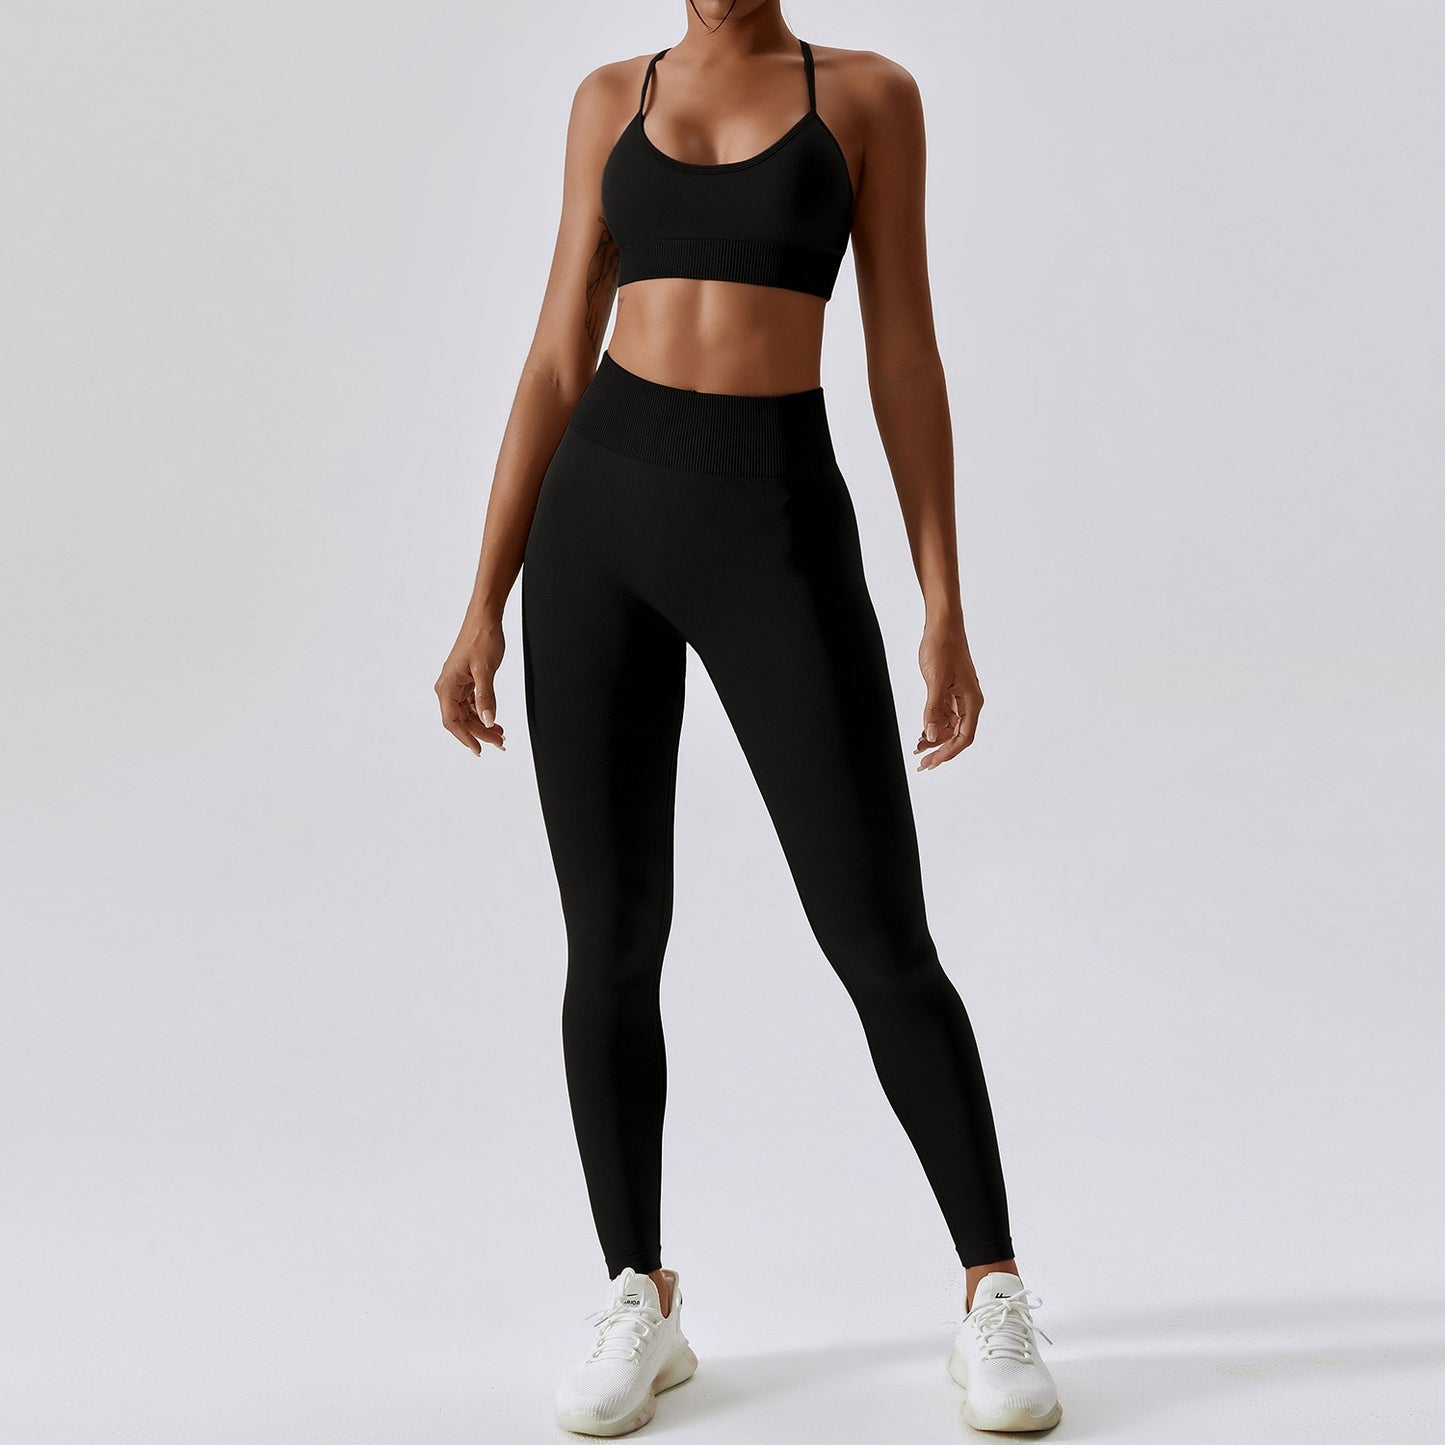 Seamless Athletic Wear Women Yoga Set 2 Piece Workout Tracksuit Sport Bra  Gym Suits Fitness High Waist Running Leggings Sports Sets